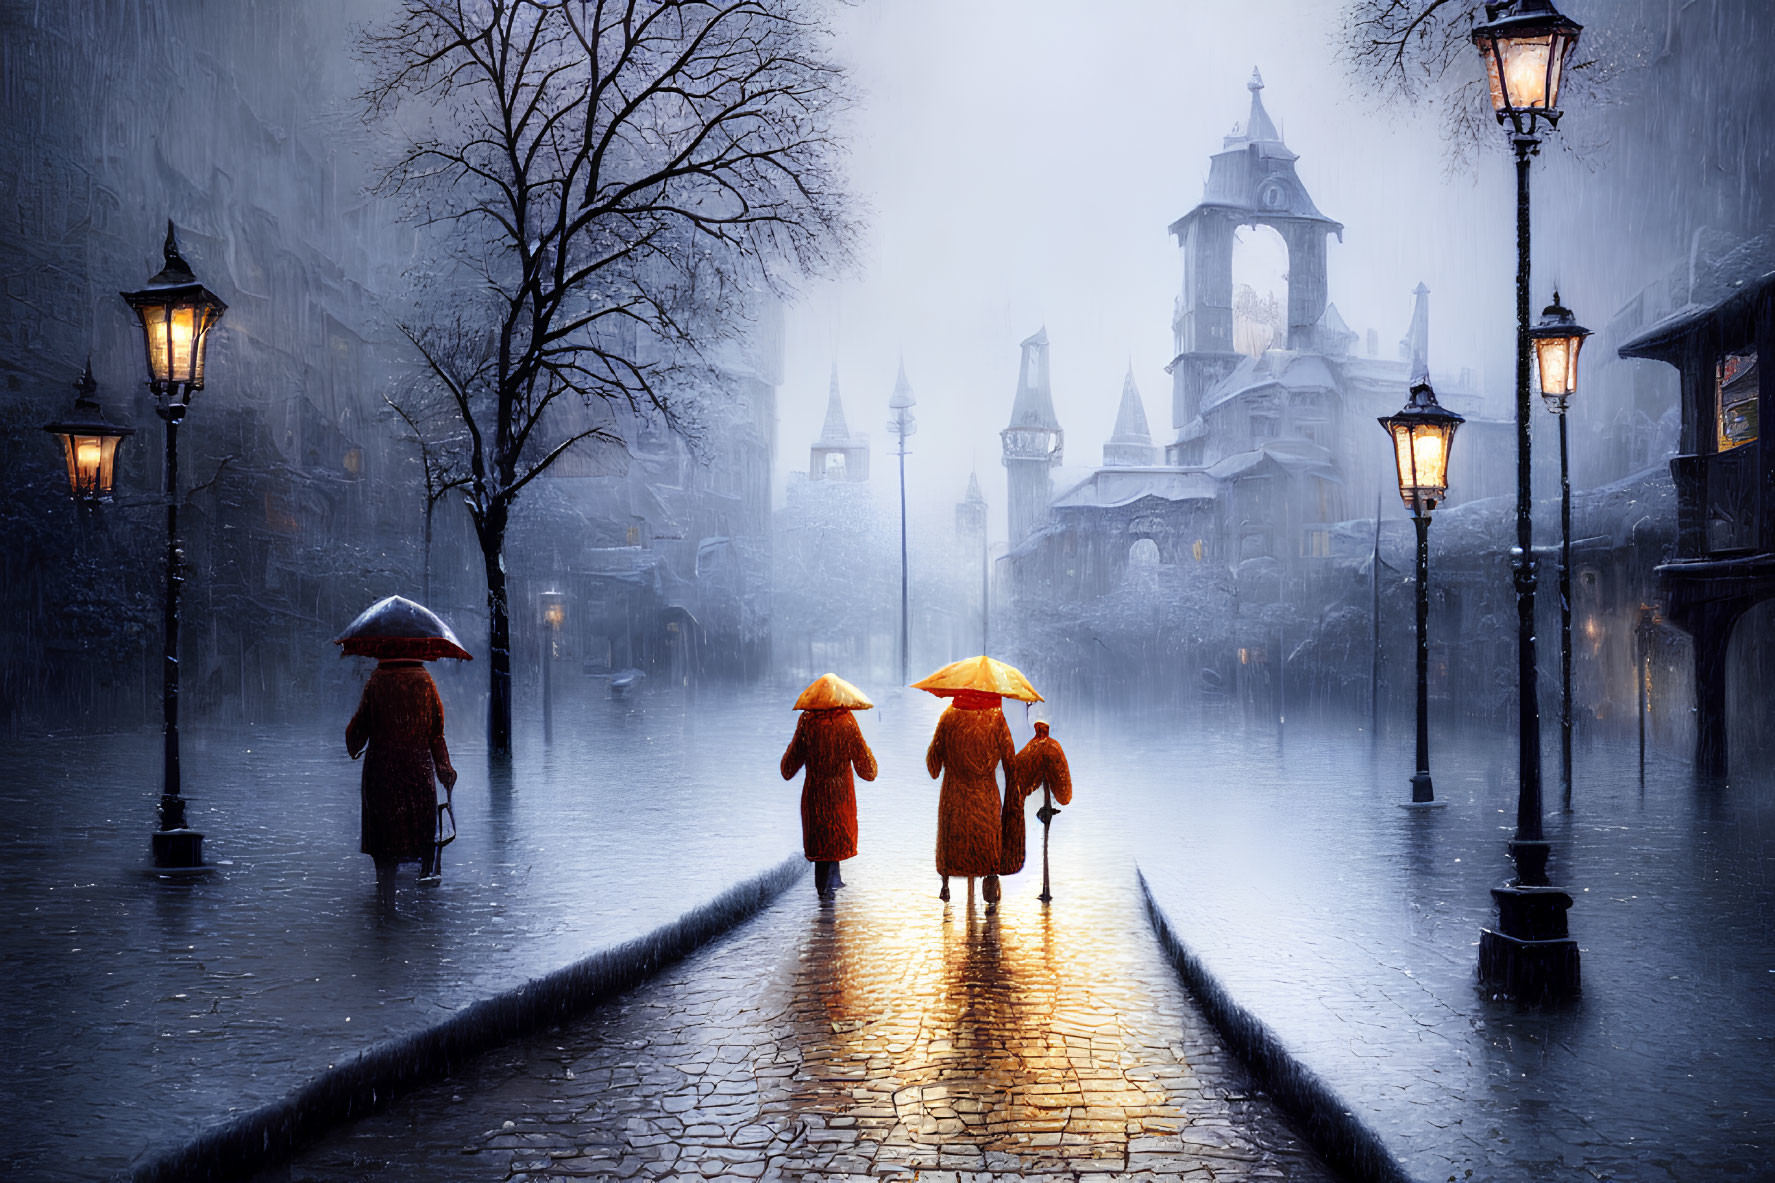 Three People Walking with Umbrellas on Rainy Cobblestone Street